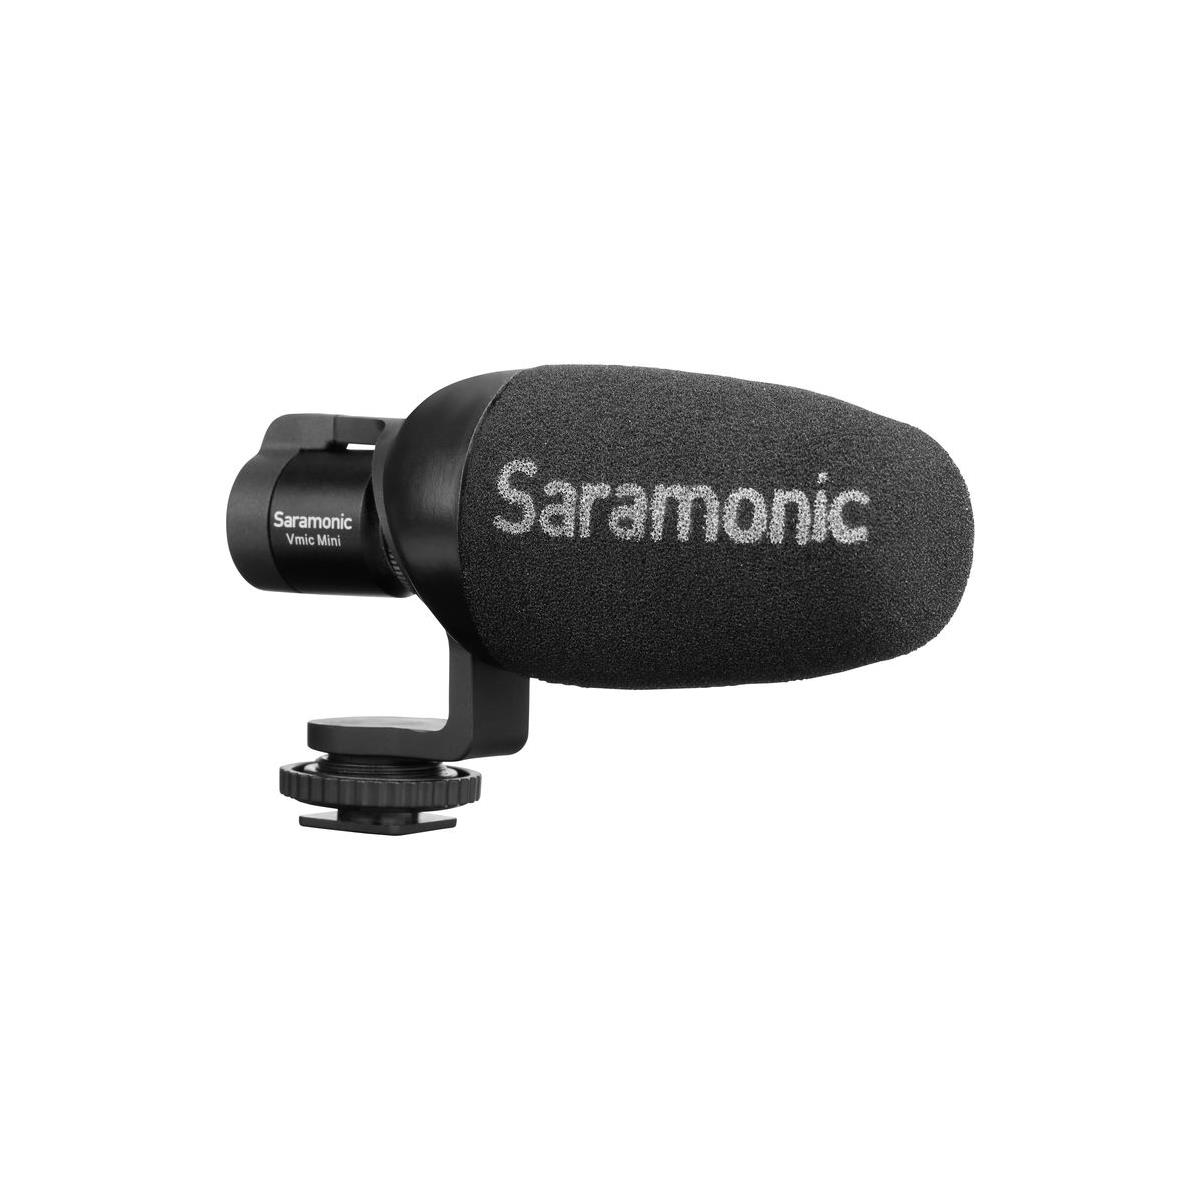 Saramonic Vmic Mini Compact Camera-Mount